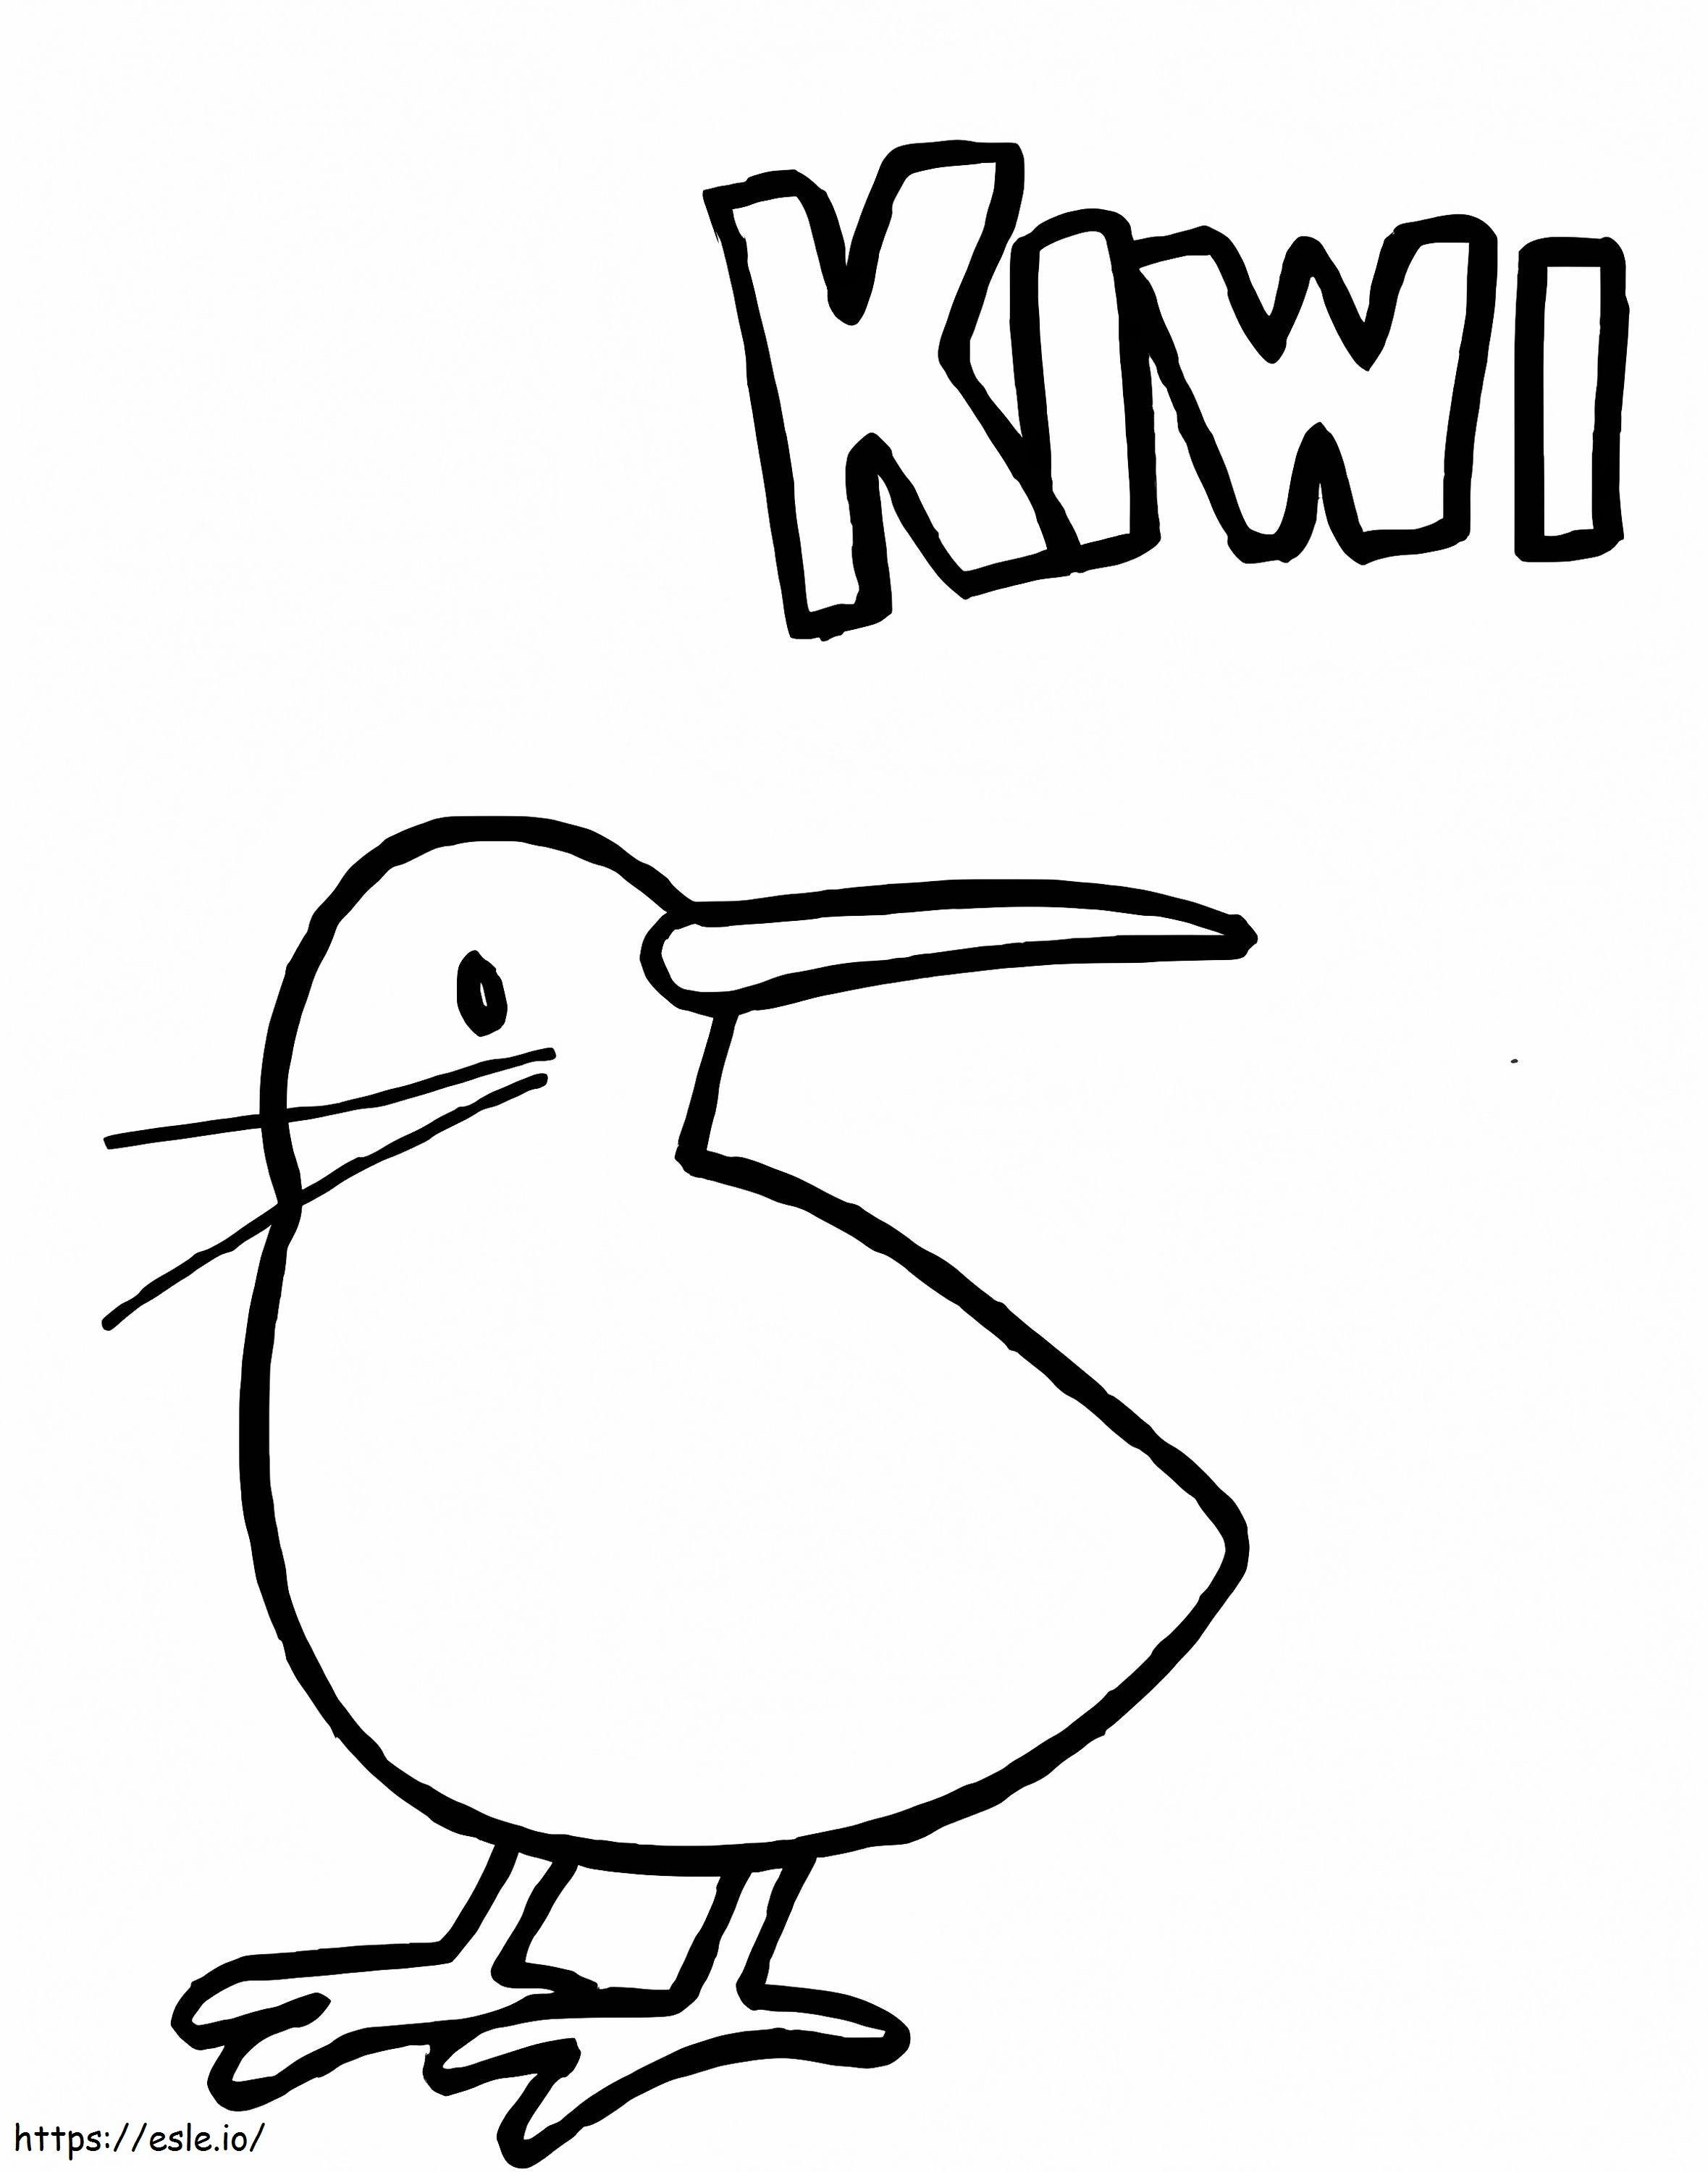 Baby Kiwi Bird coloring page